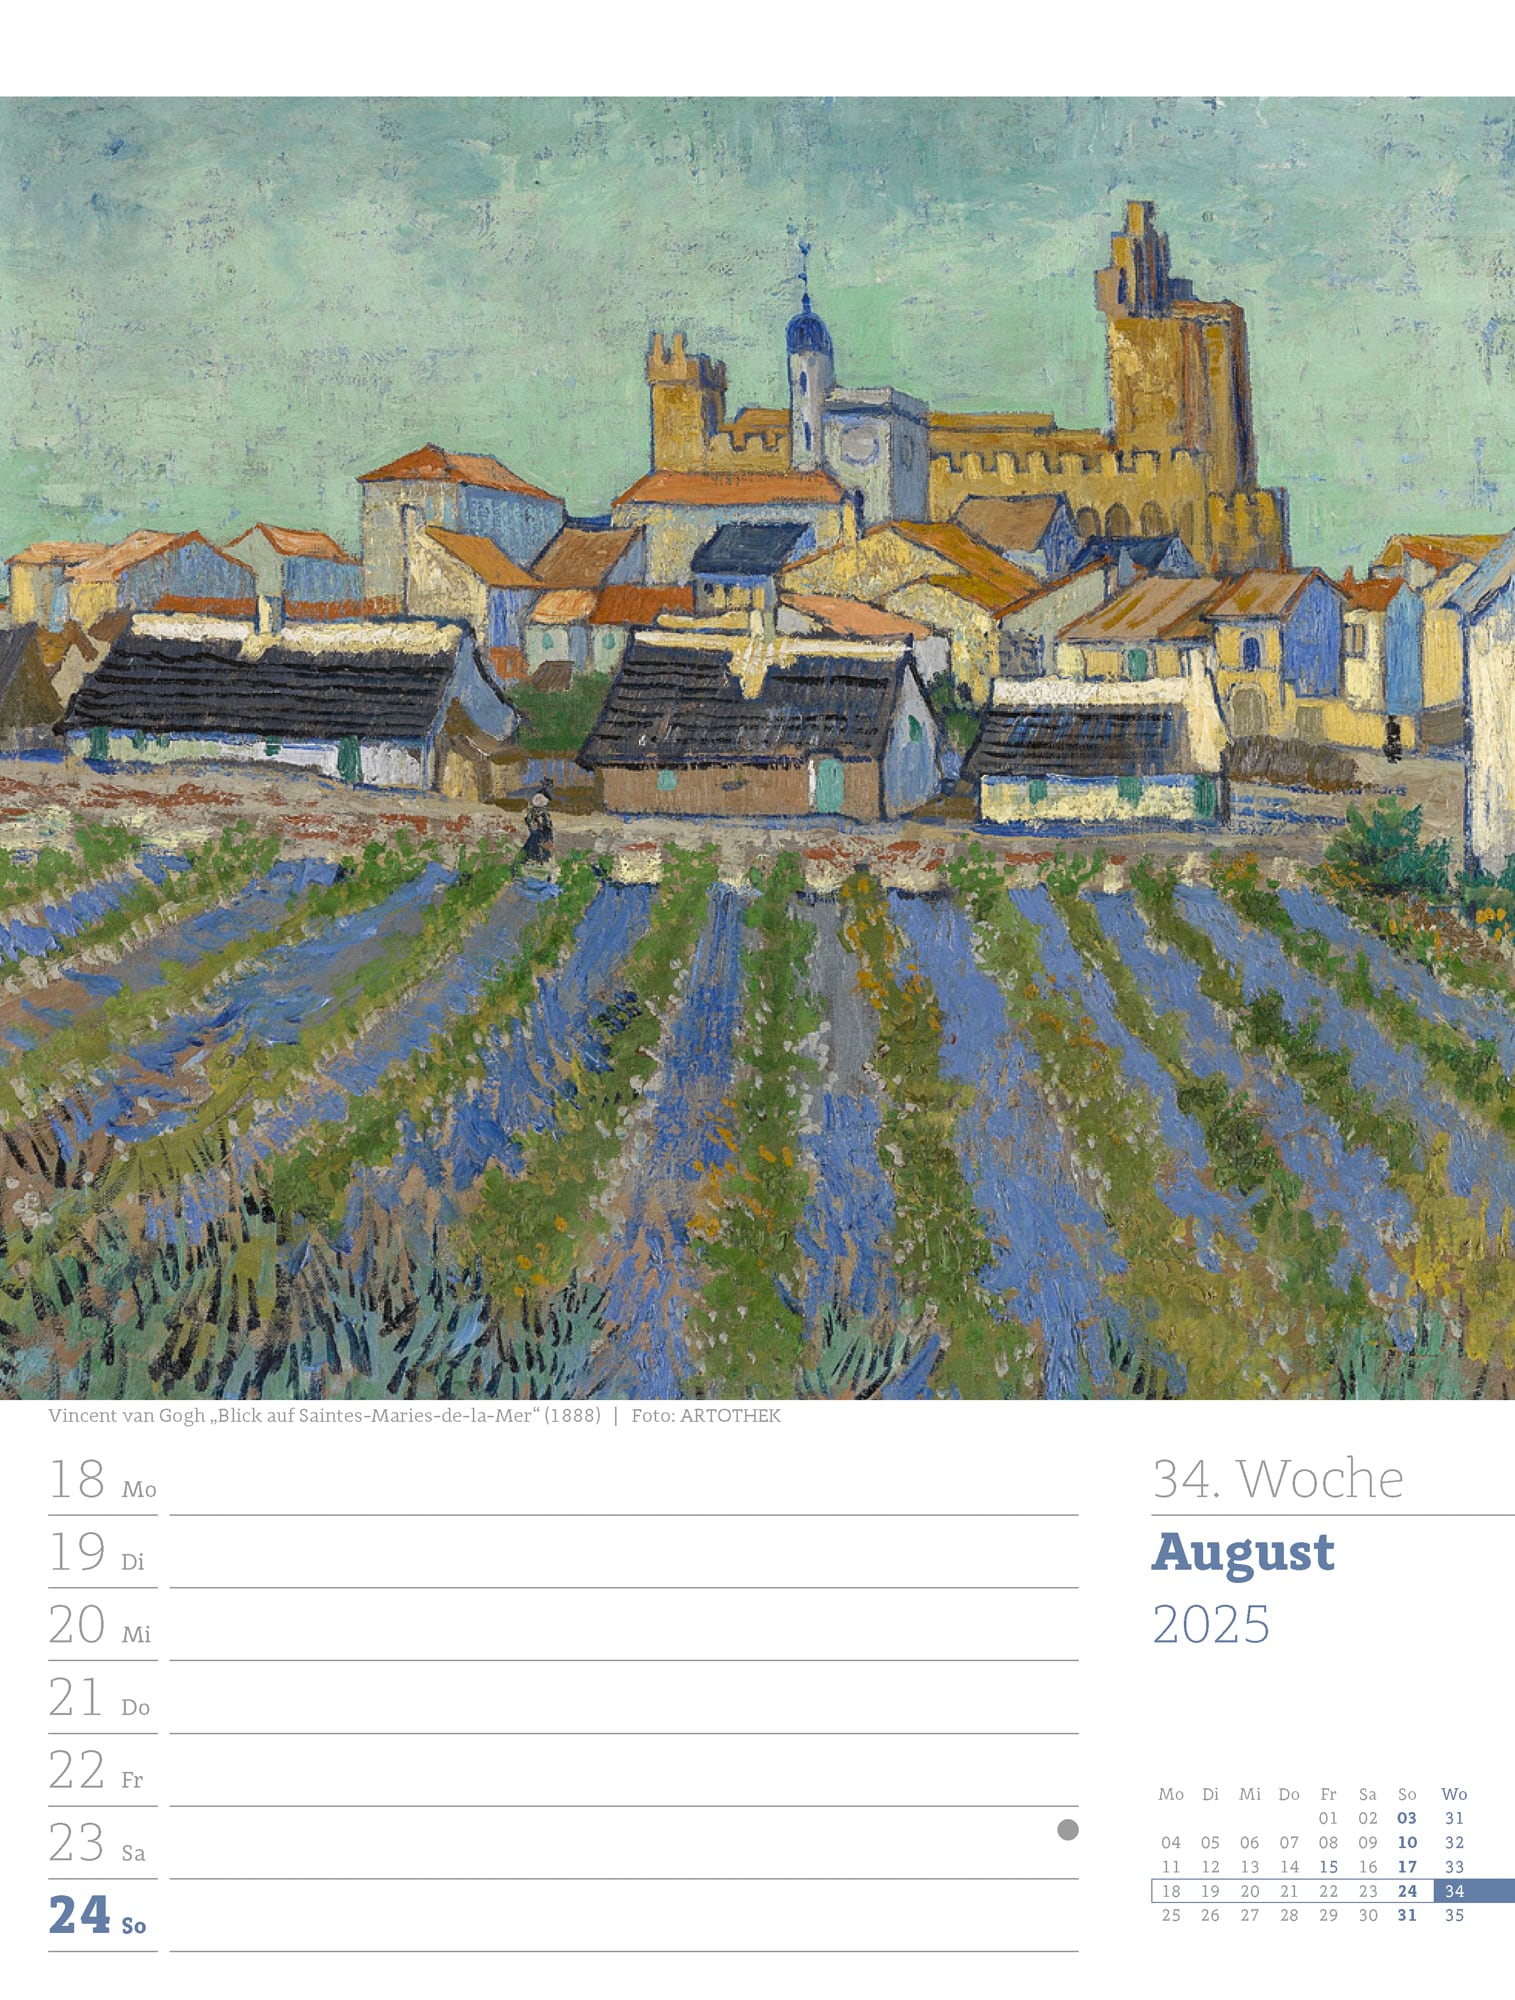 Ackermann Calendar World of Art 2025 - Weekly Planner - Inside View 37